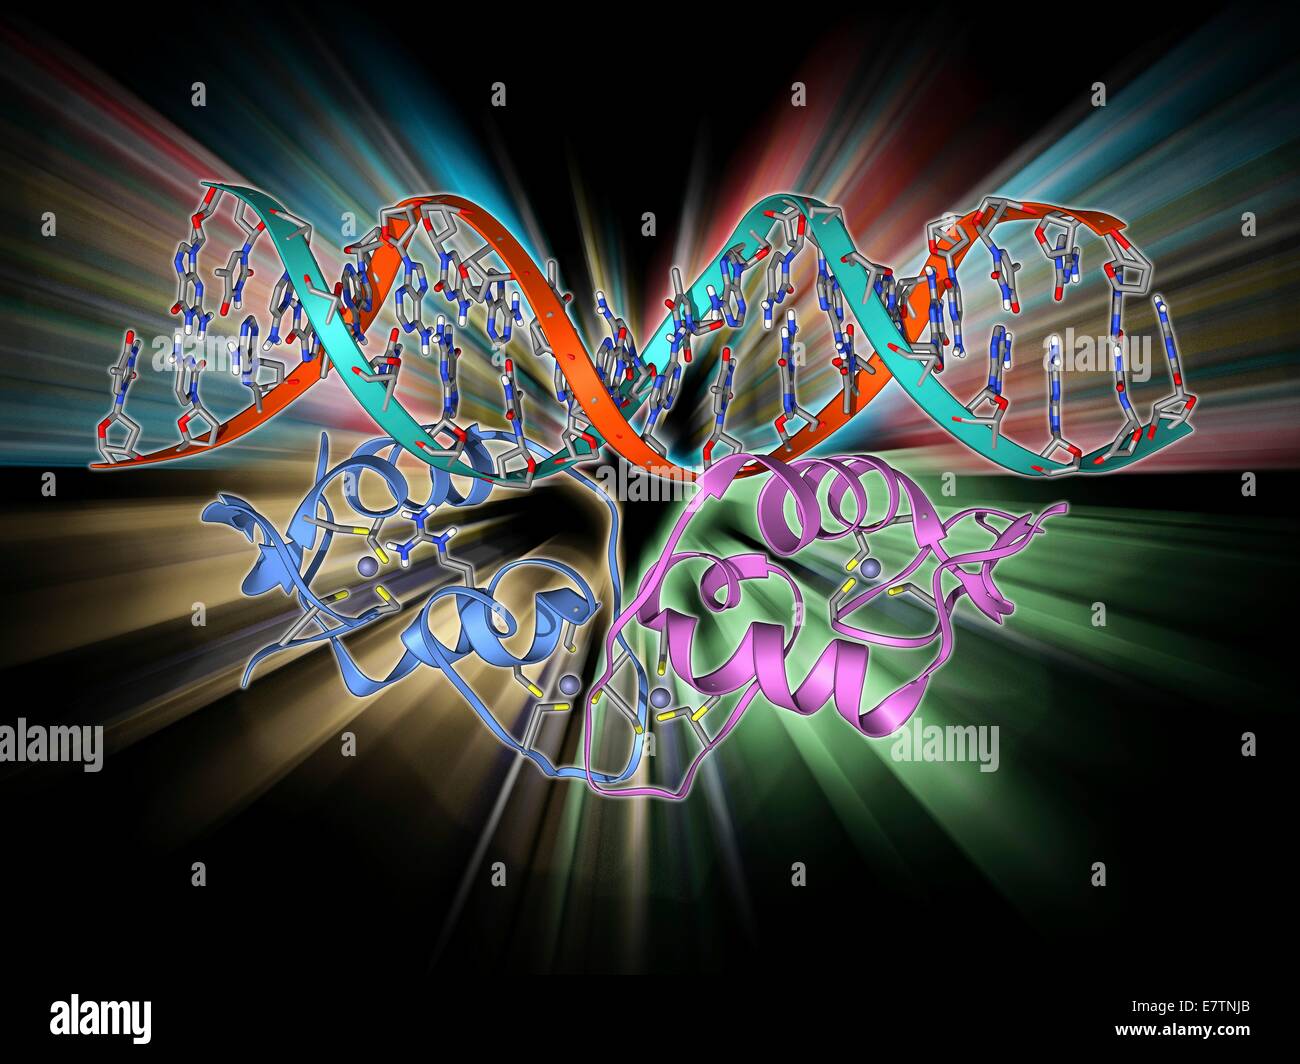 Transkriptionsfaktor und DNA-Molekül. Molekulares Modell des Glukokortikoid-Rezeptor (GR) Transkription Faktor Protein (Pink und blau) komplexiert mit einem Molekül der DNA (Desoxyribonukleinsäure, rot und blau). Transkriptionsfaktoren regulieren die Transkription des Stockfoto